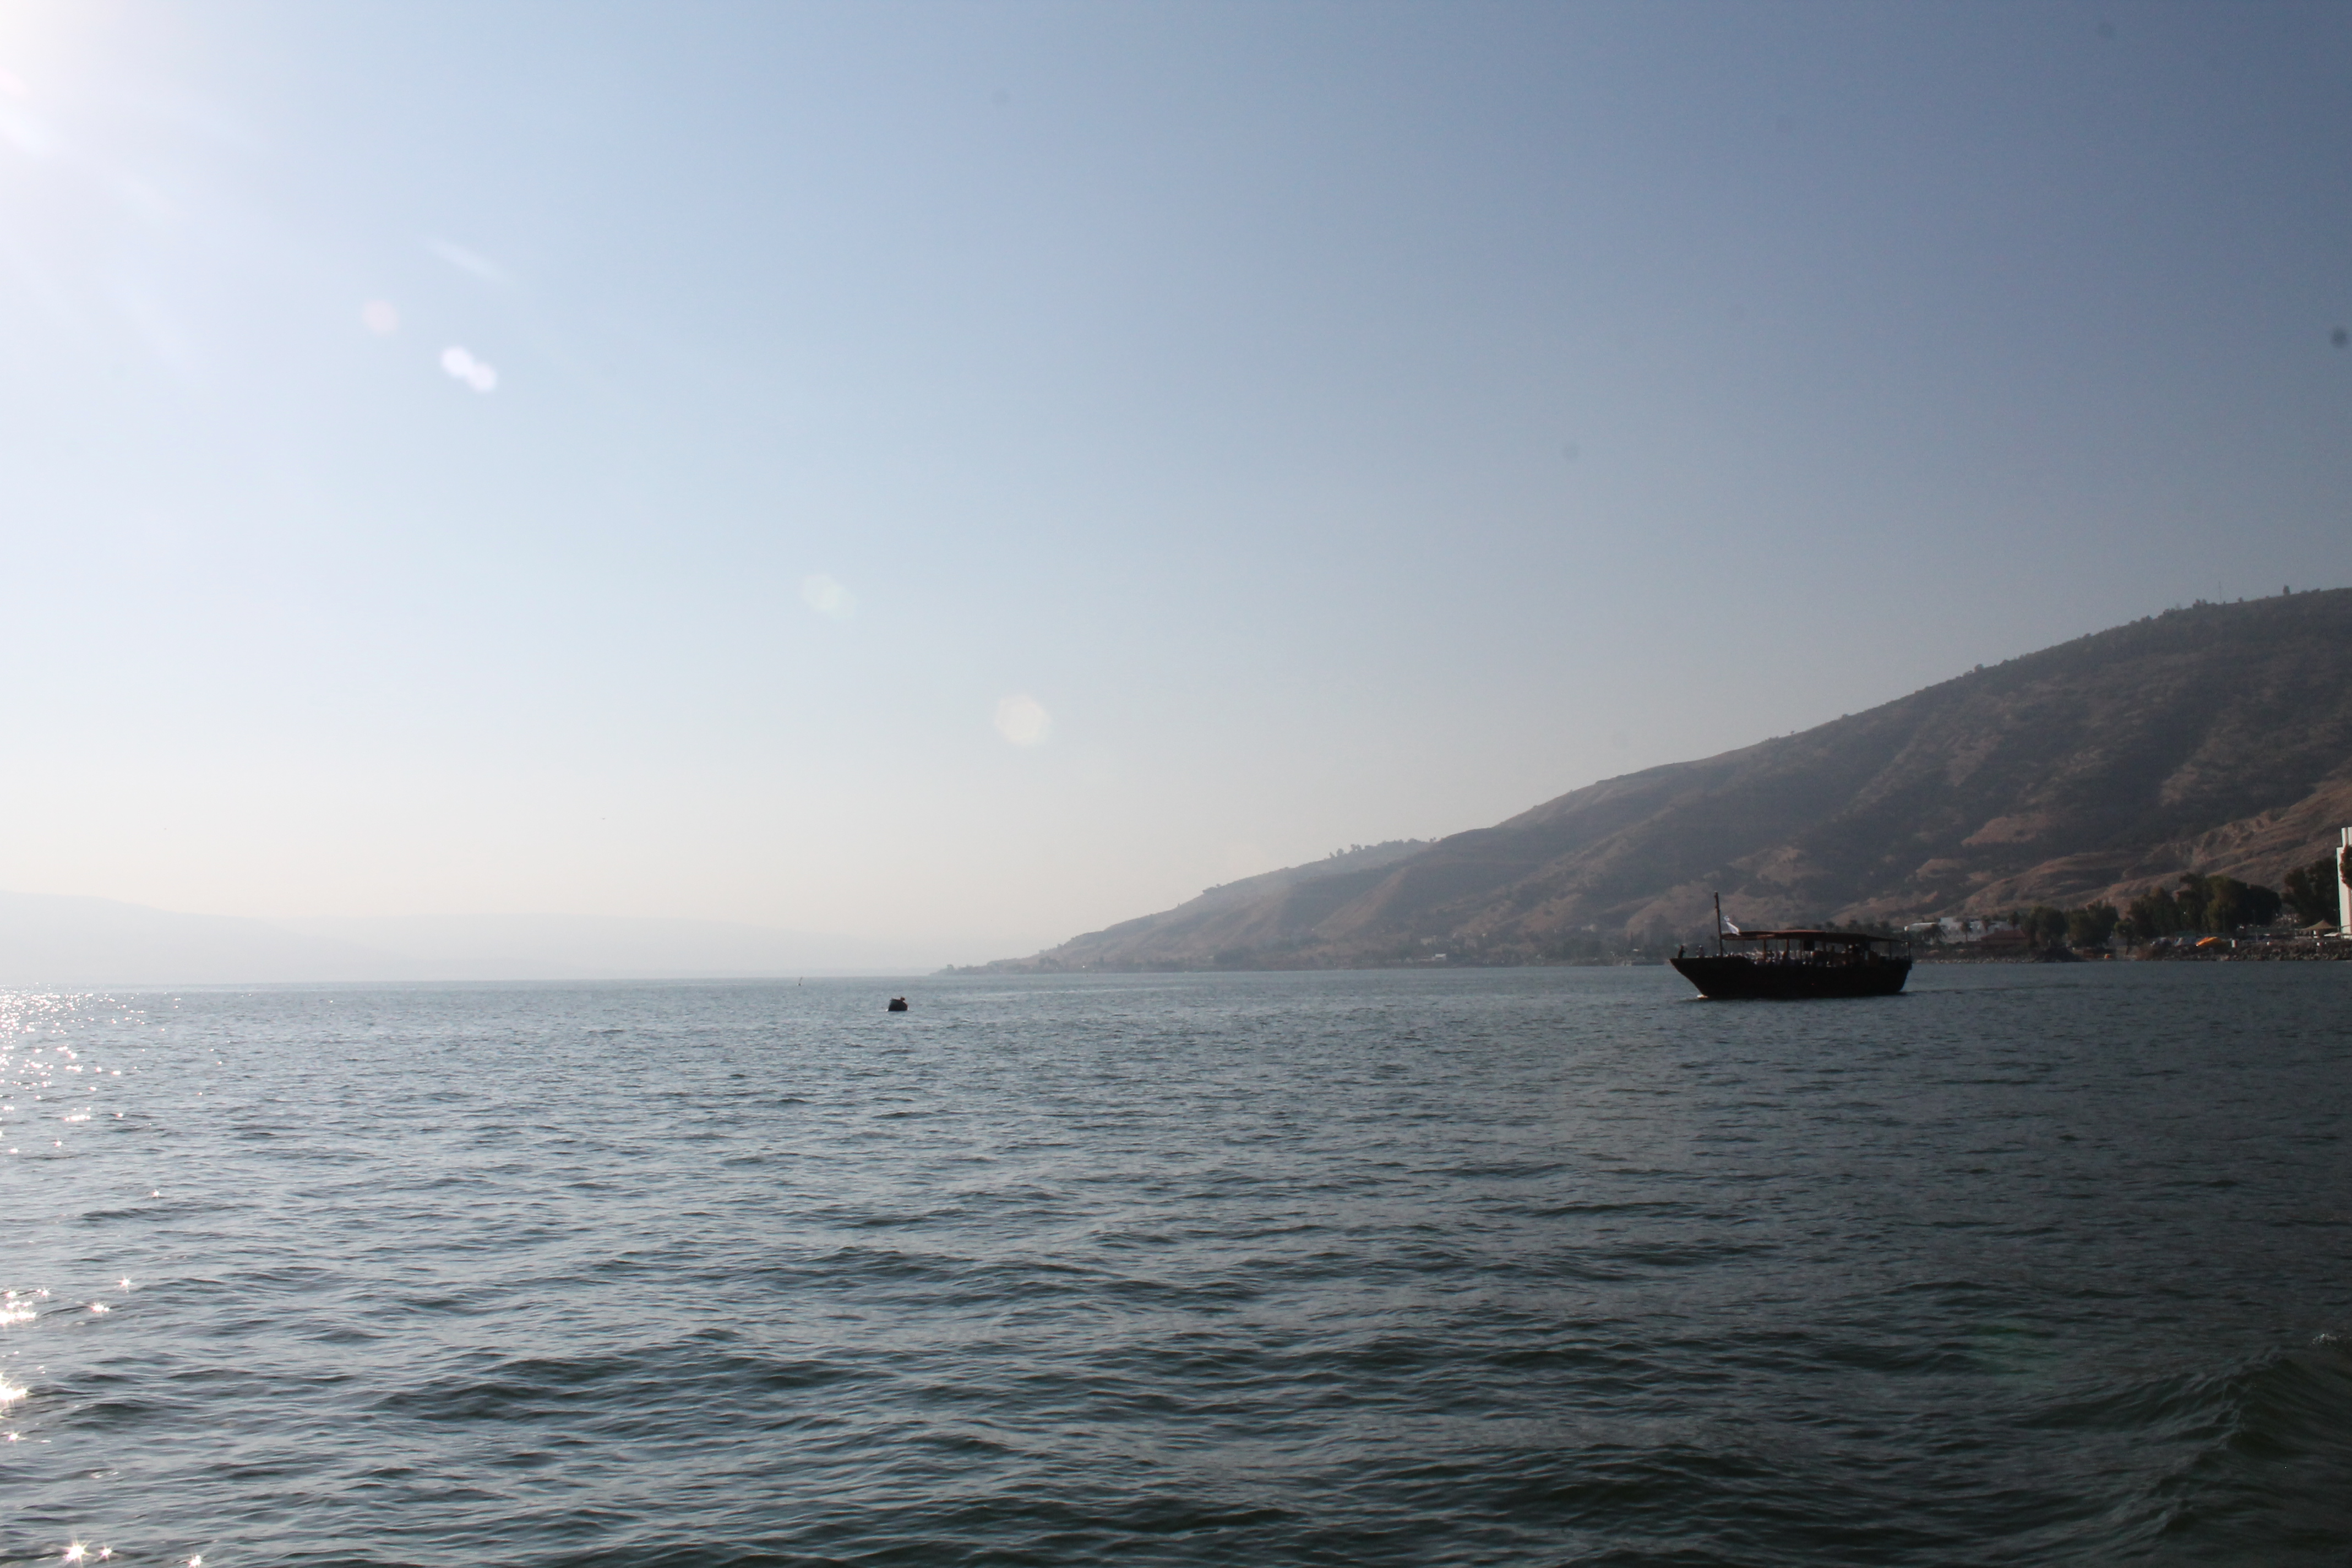 Sea of Galilee (Photo: 5j2014mrpender.wordpress.com)